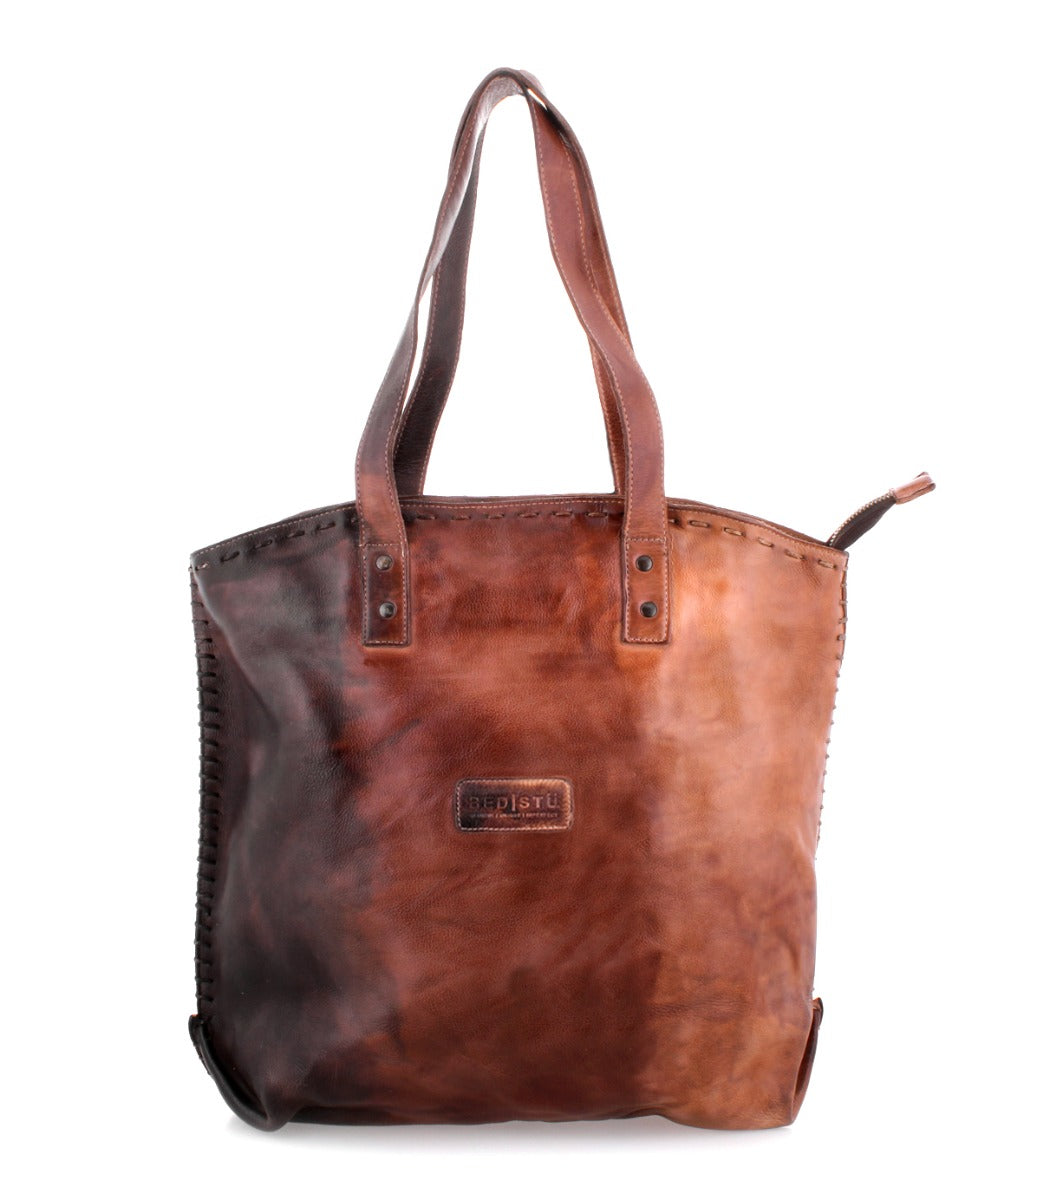 A Skye II brown leather tote bag by Bed Stu.